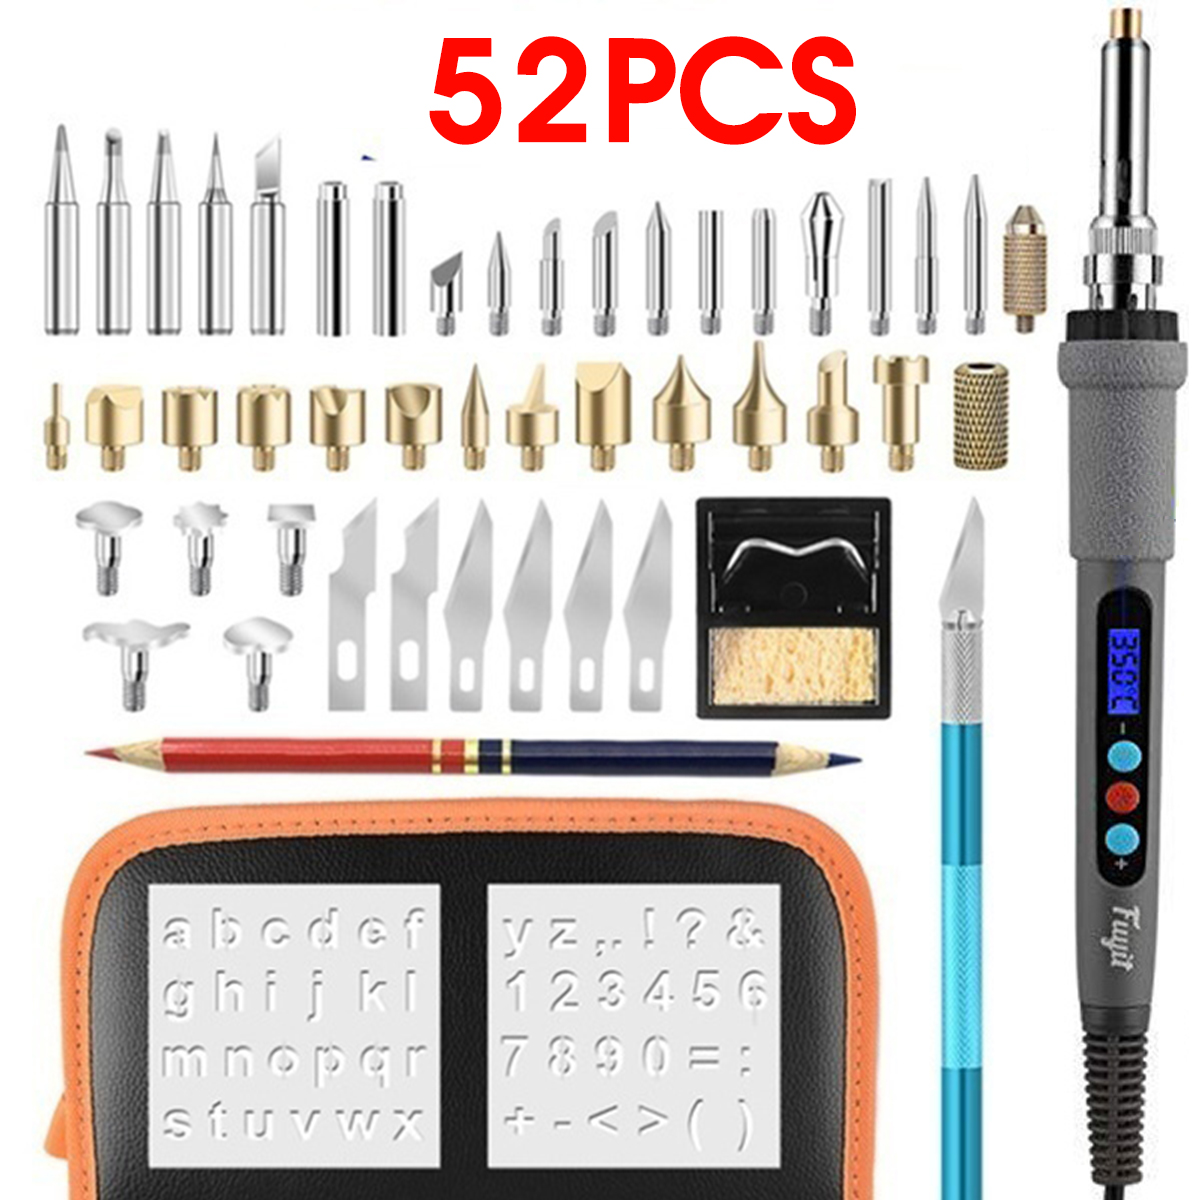 52Pcs-Digital-Engraving-Soldering-Iron-Tools-Set-Constant-Temperature-Electric-Soldering-Iron-set-So-1633203-1